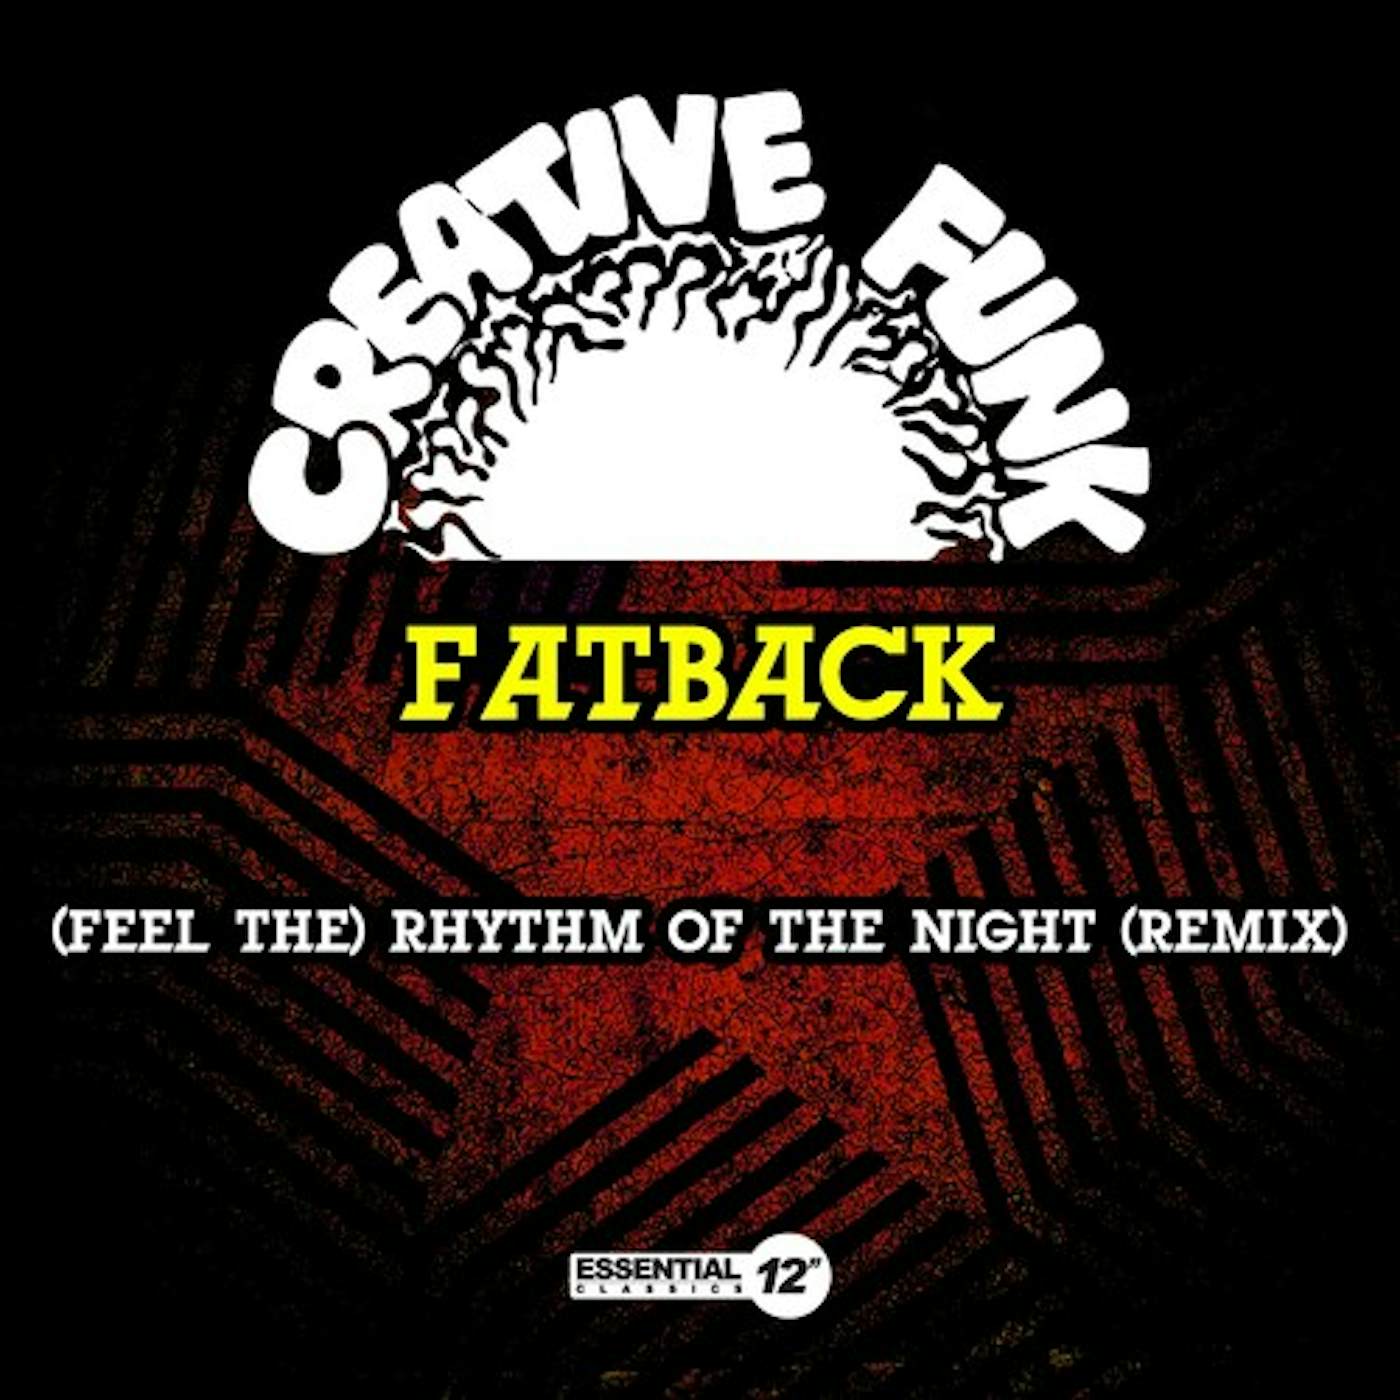 Fatback Band (FEEL THE) RHYTHM OF THE NIGHT (REMIX) CD